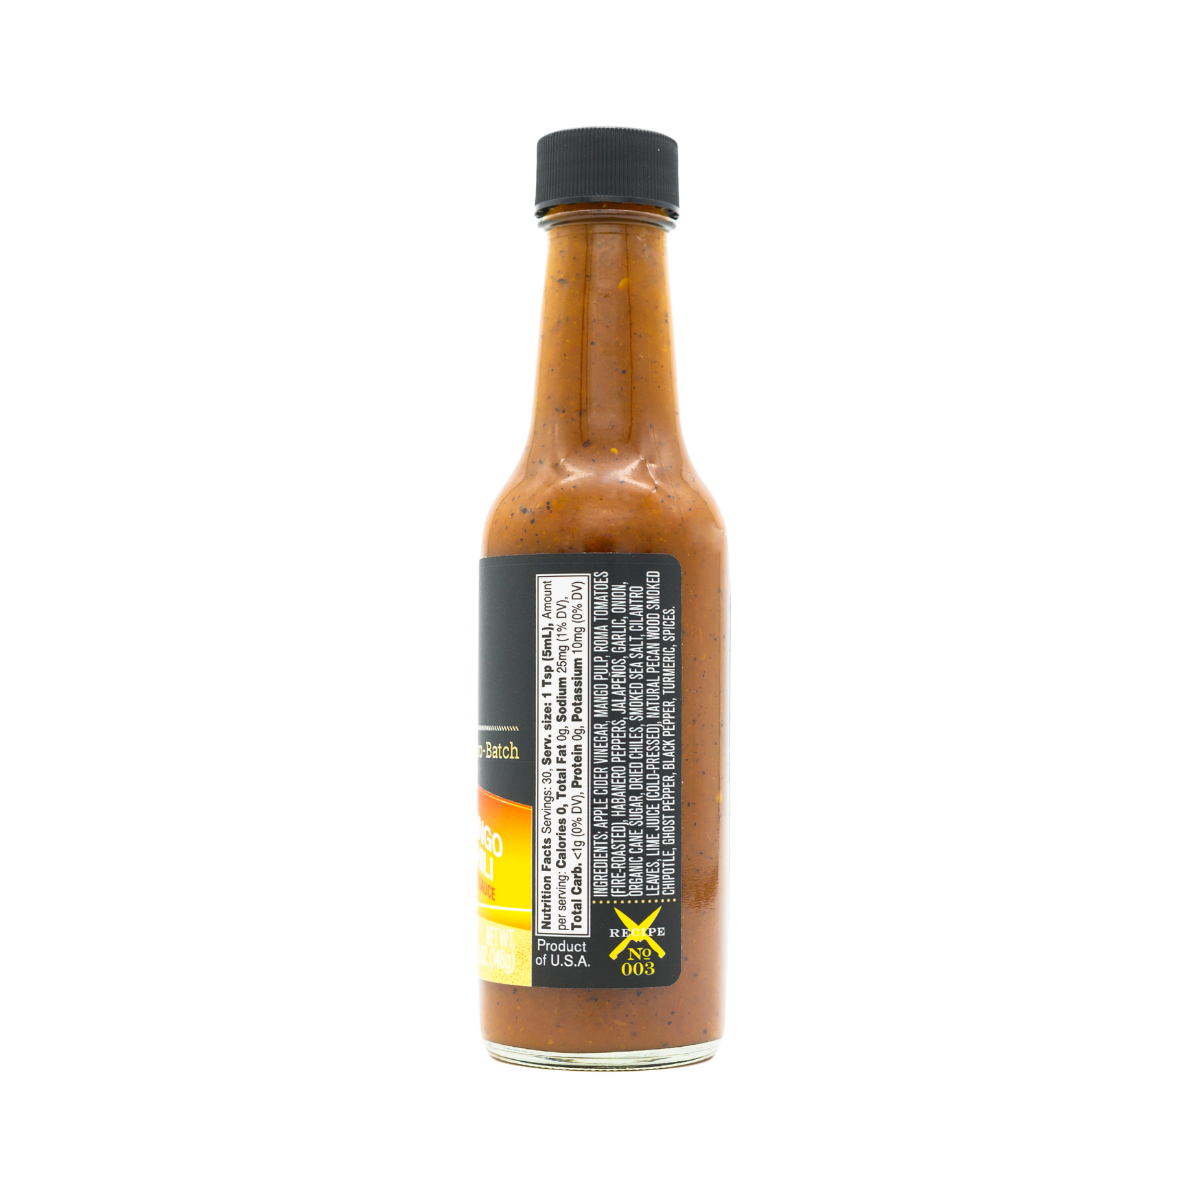 BLAZE 619 Mango Chili Hot Sauce - 5 oz.- Nutrition Facts